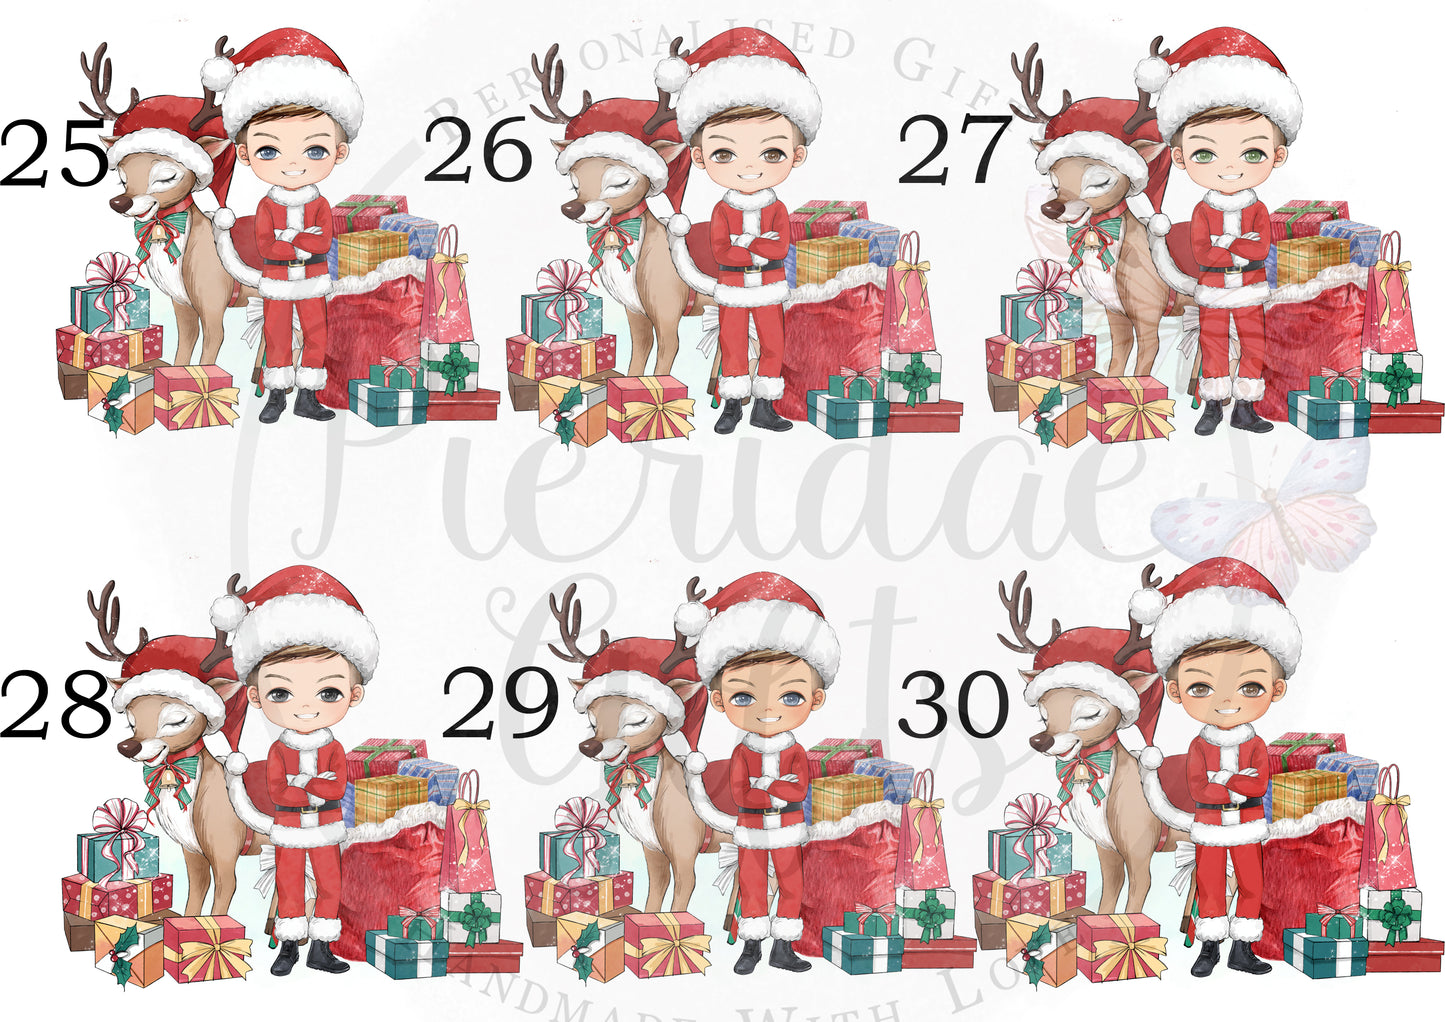 Personalised Luxury Christmas Santa Sack, Xmas Stocking, 66 x 50 cm